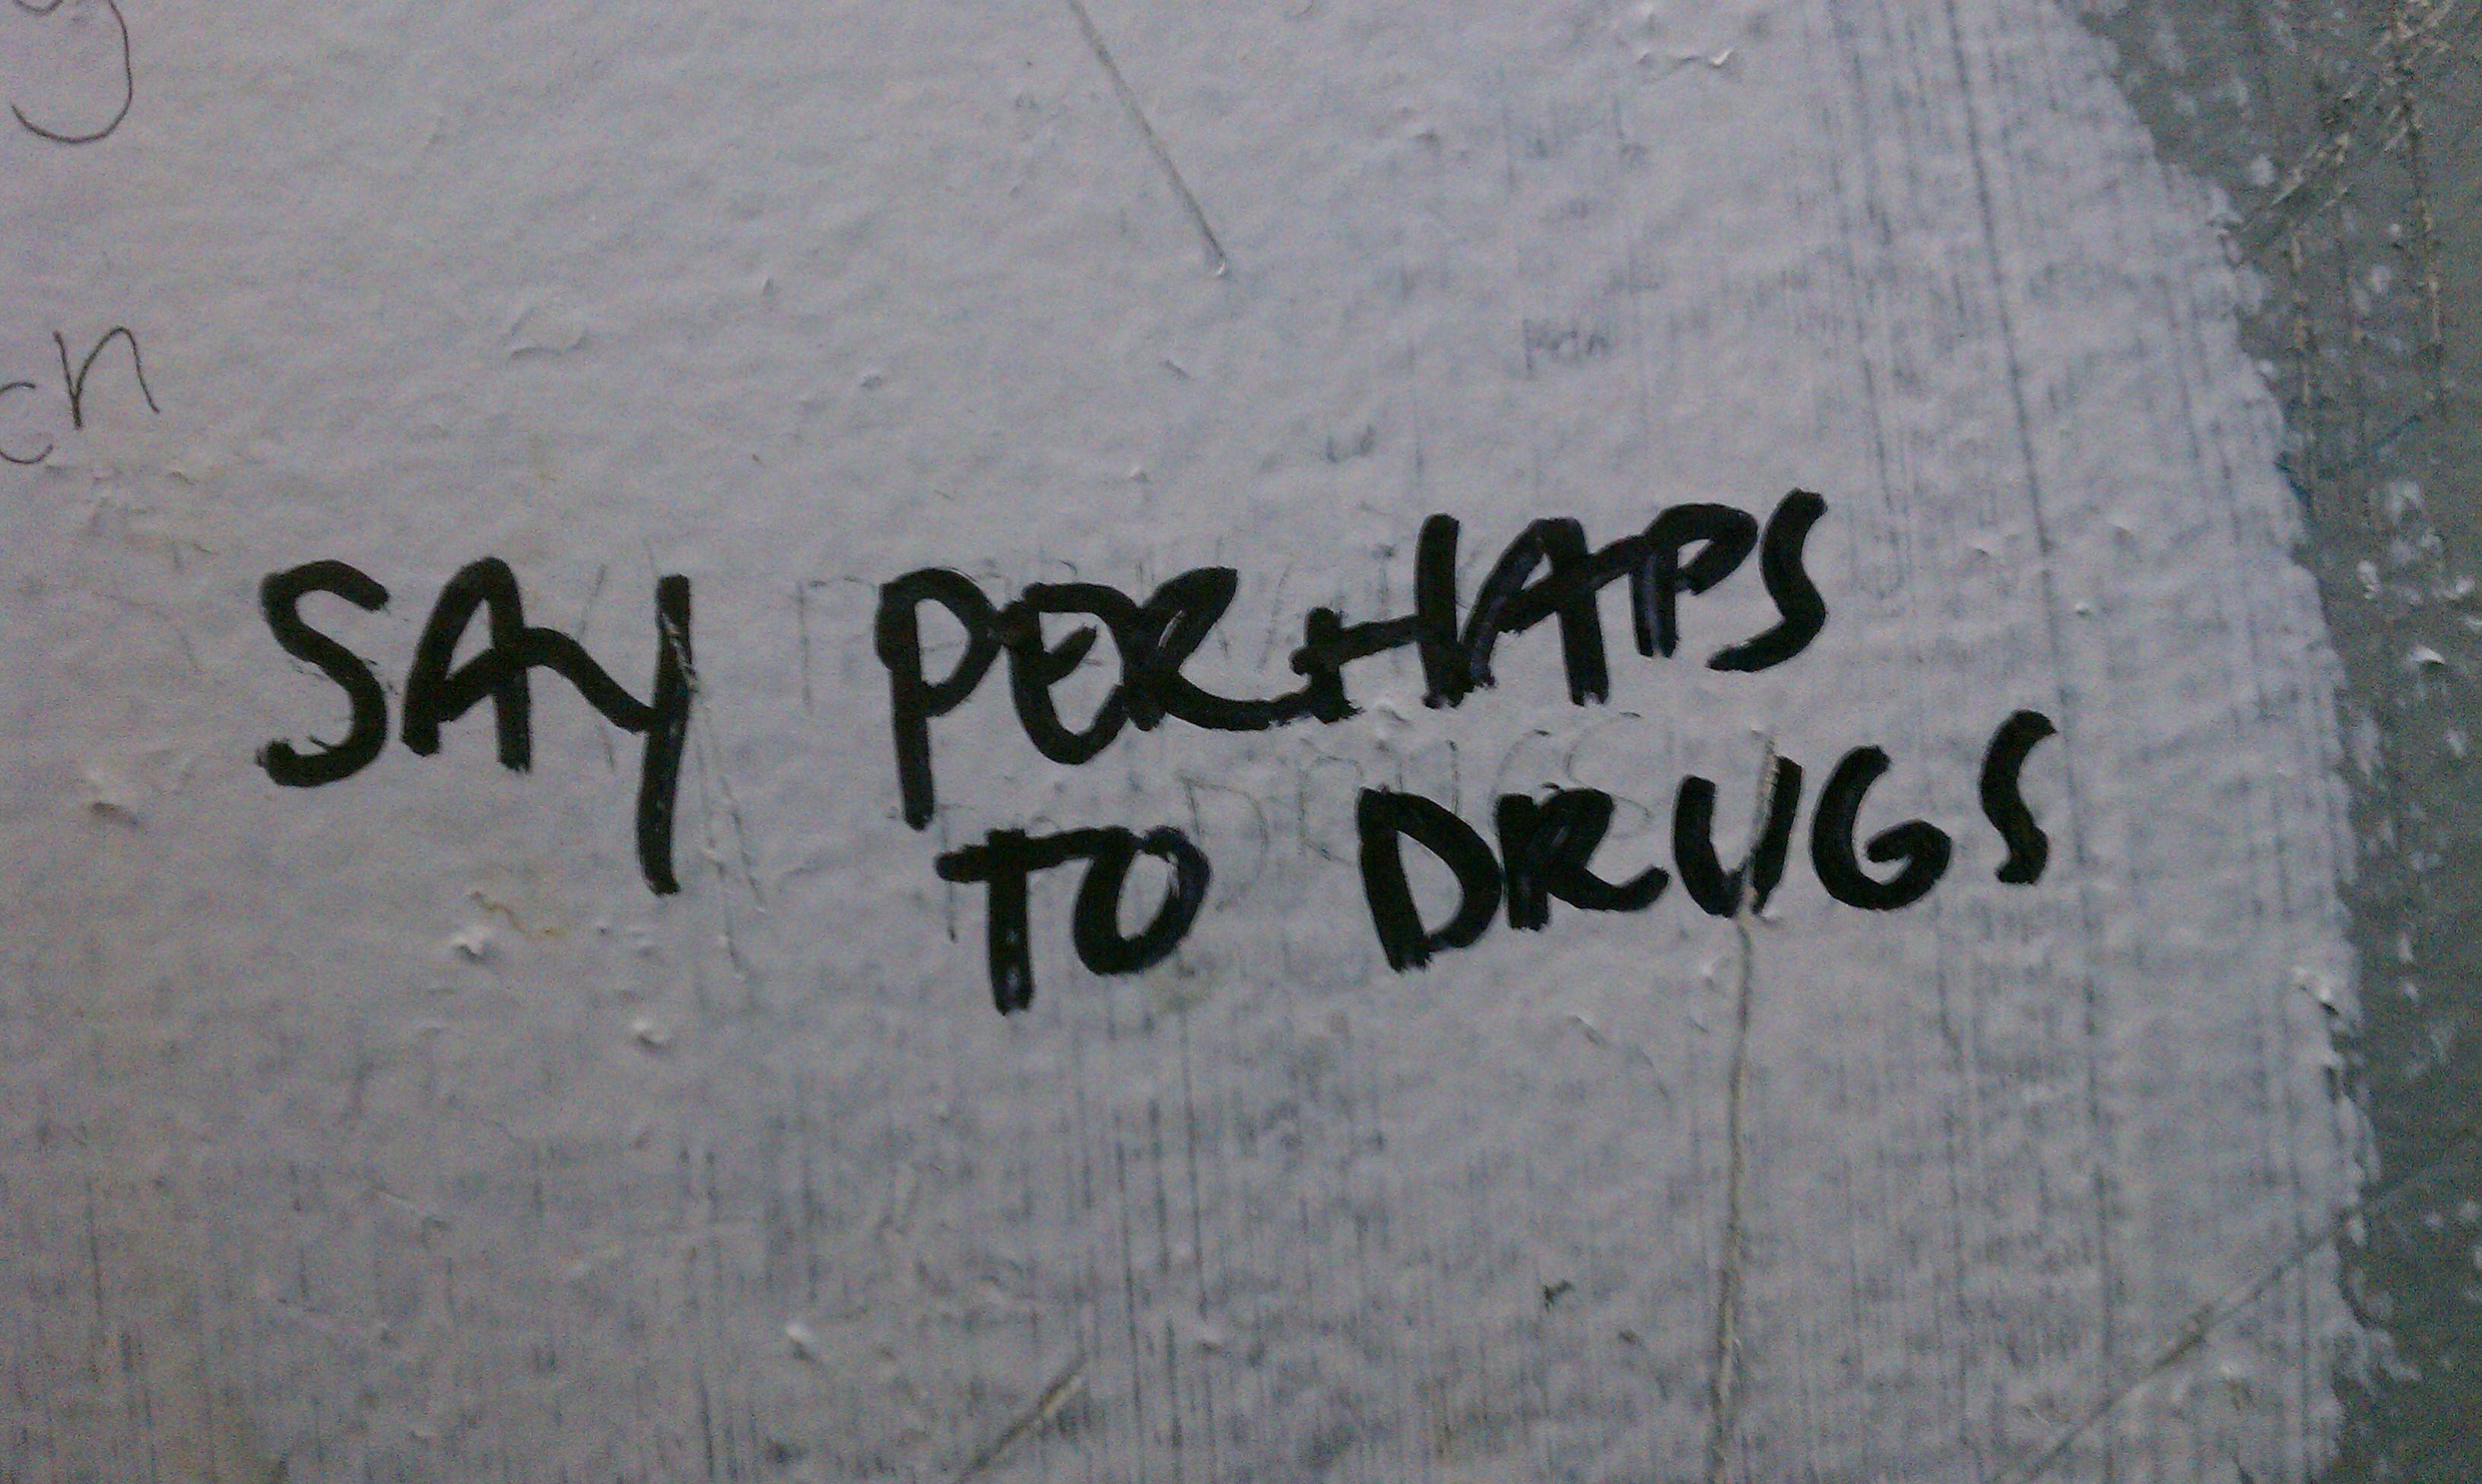 say_perhaps_to_drugs.jpg